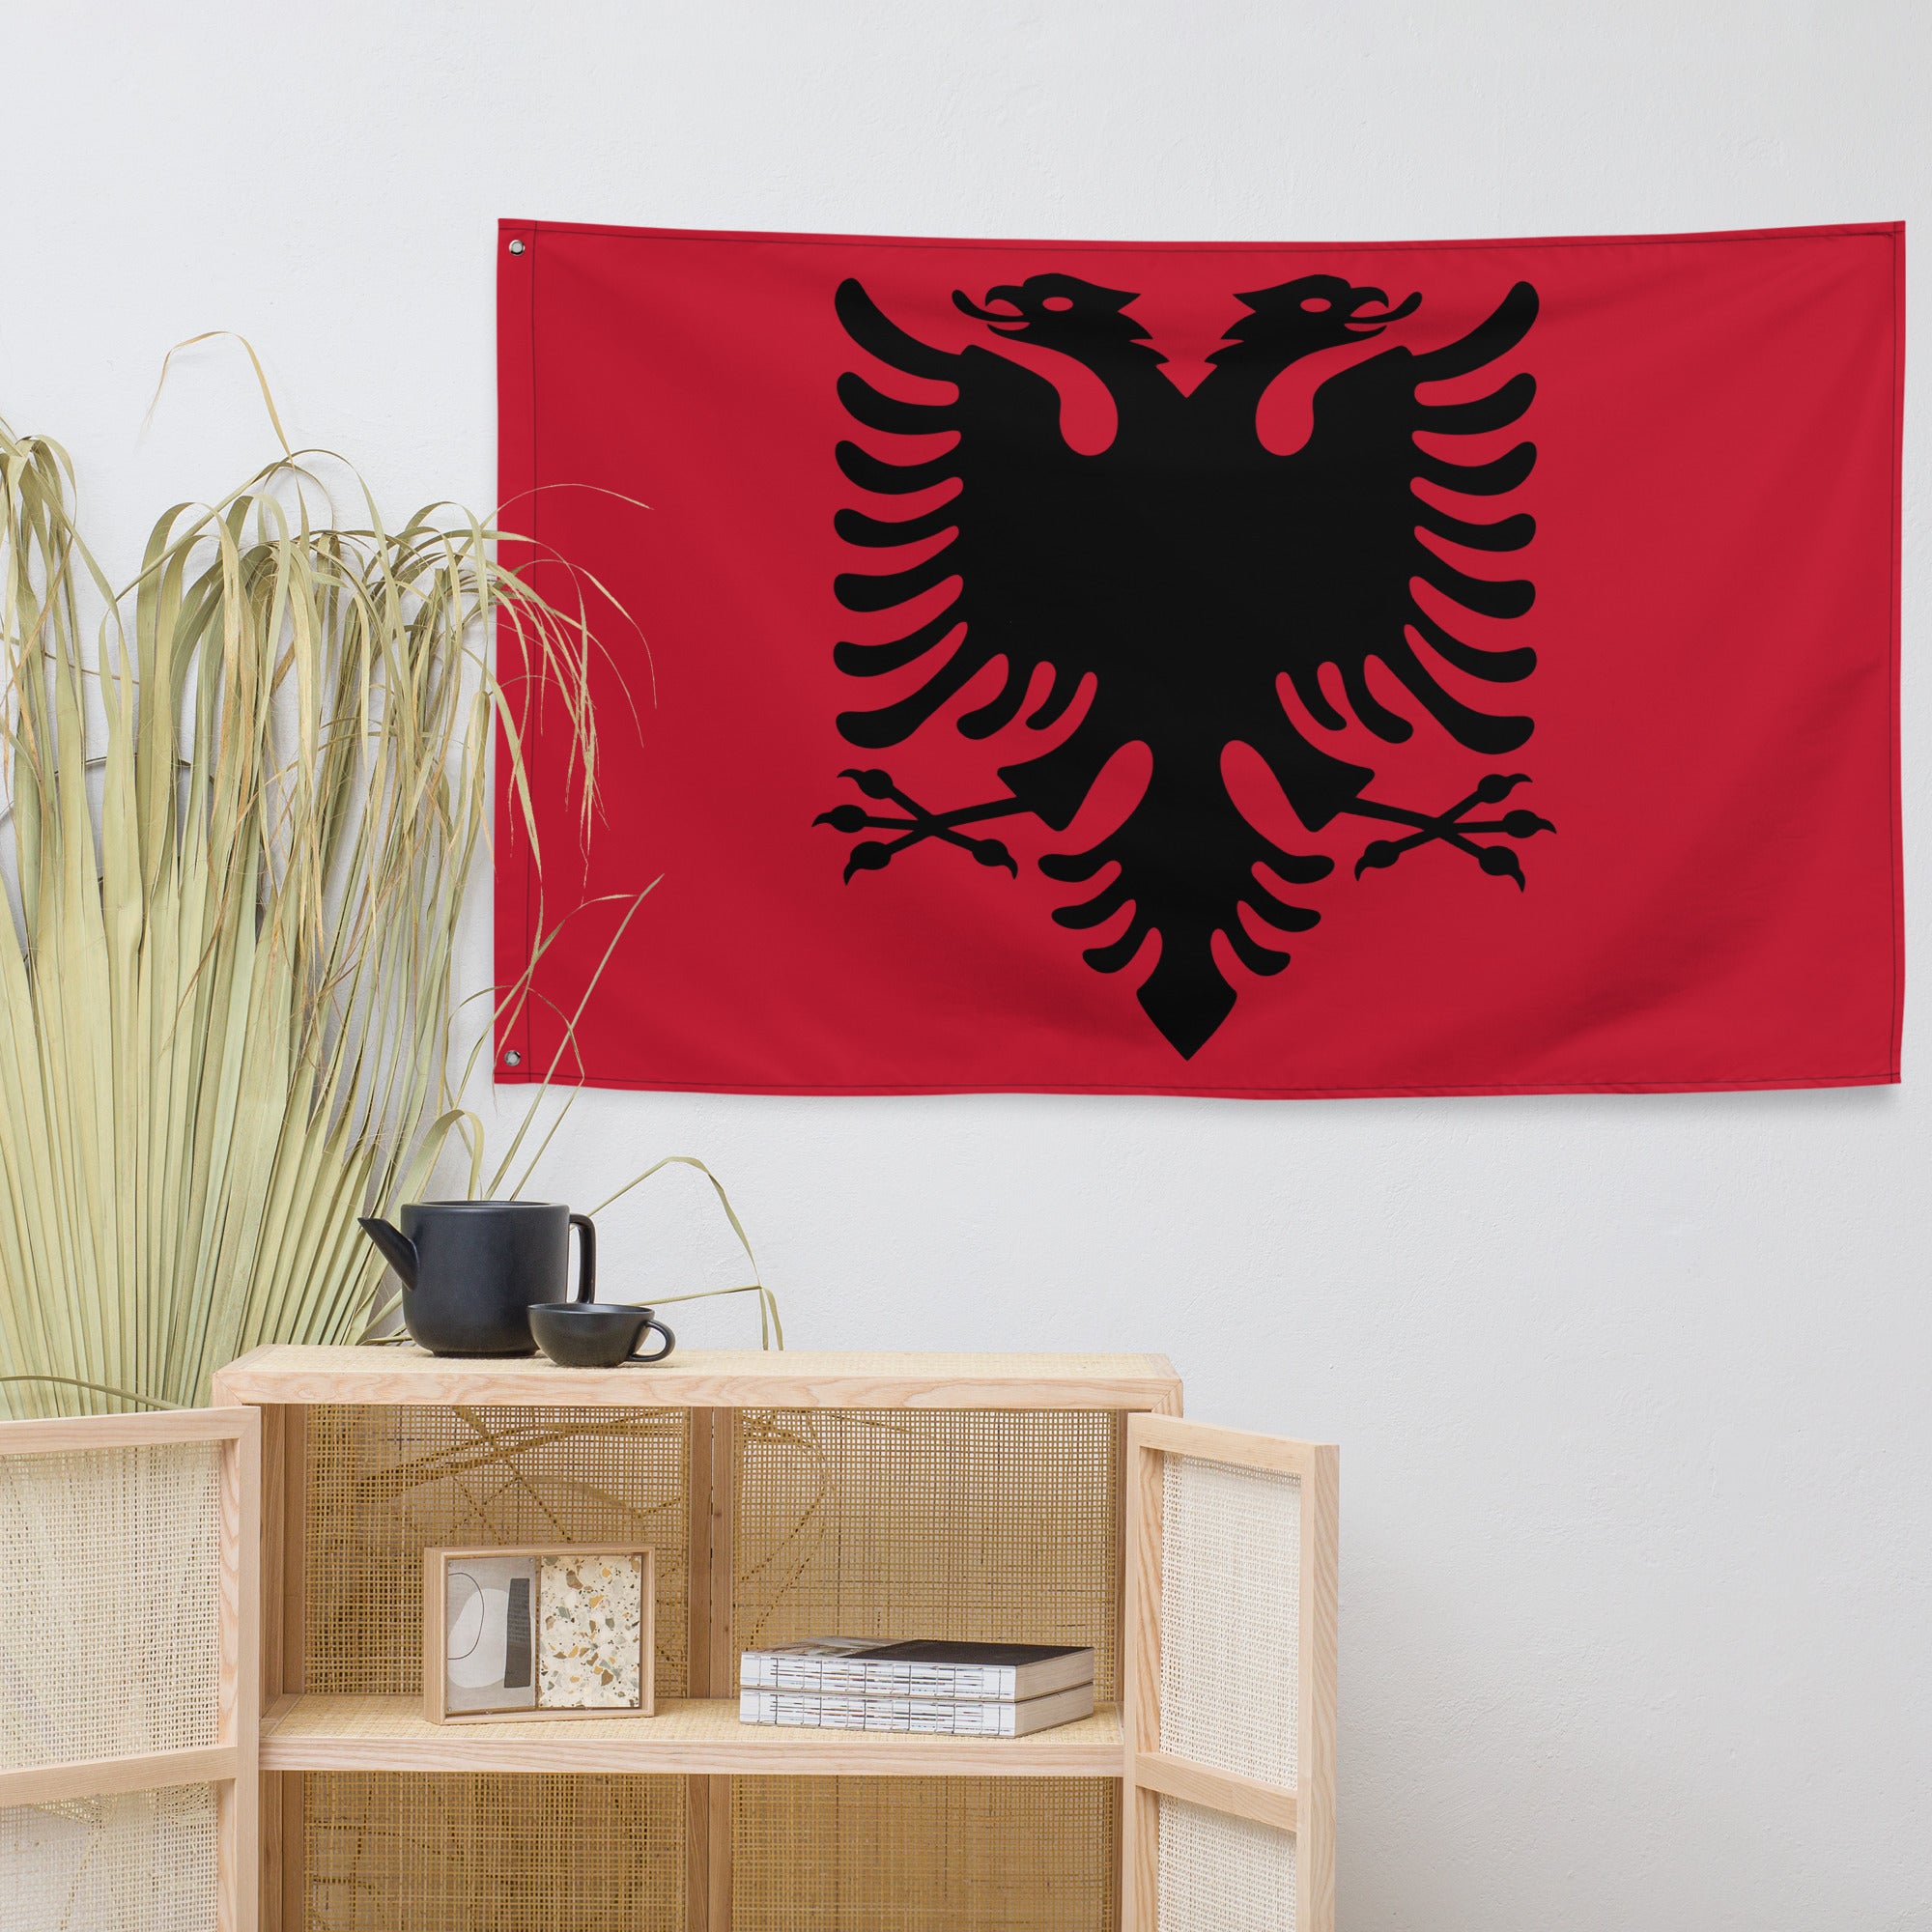 Albanian Flag | Flamuri shqiptar kuq e zi